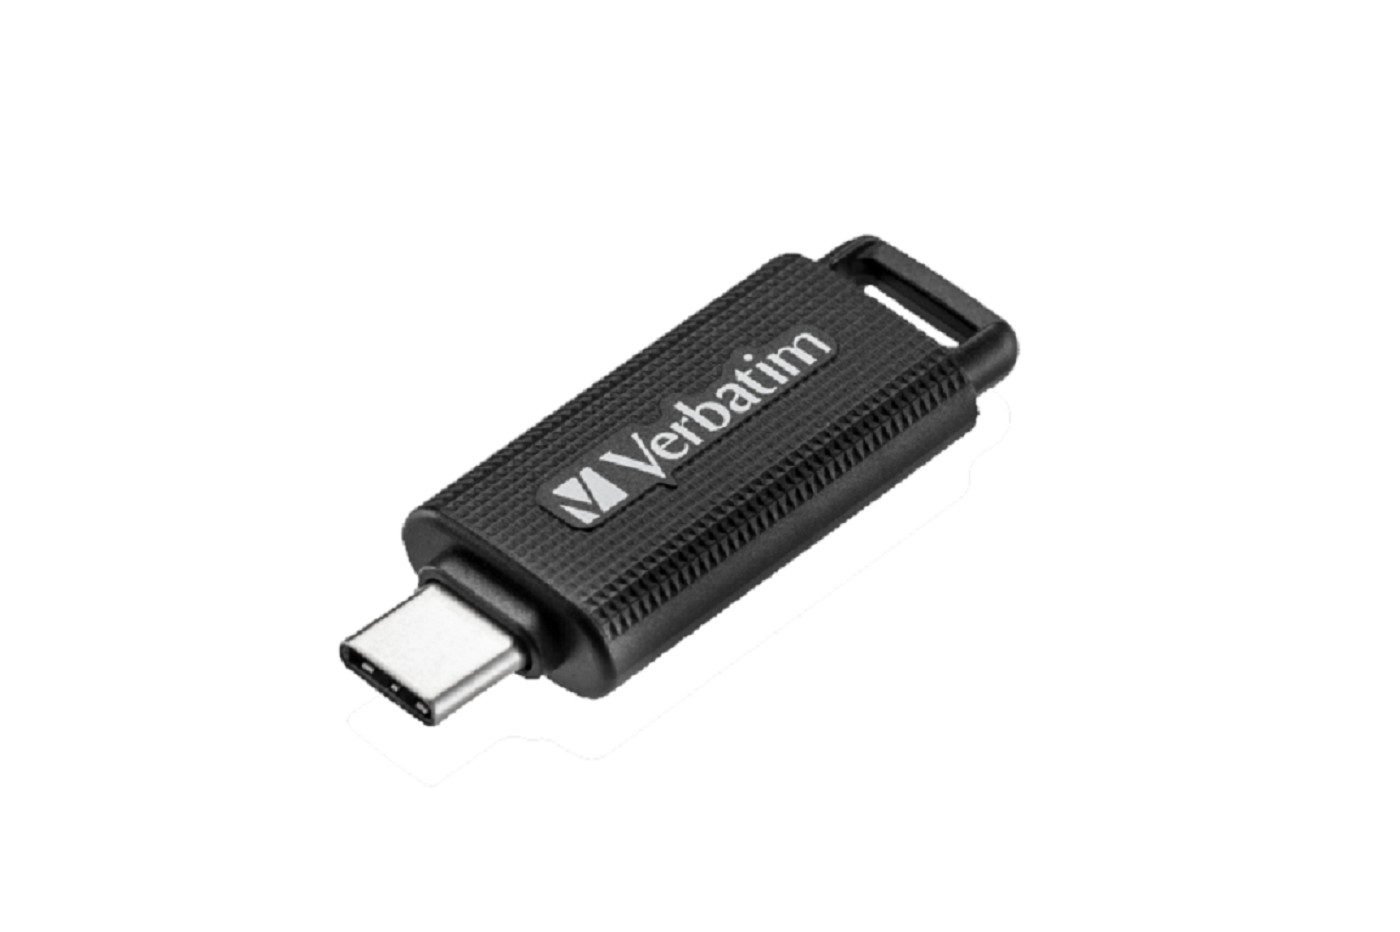 Verbatim Store n Go USB-C 128 Go - Fiche technique 